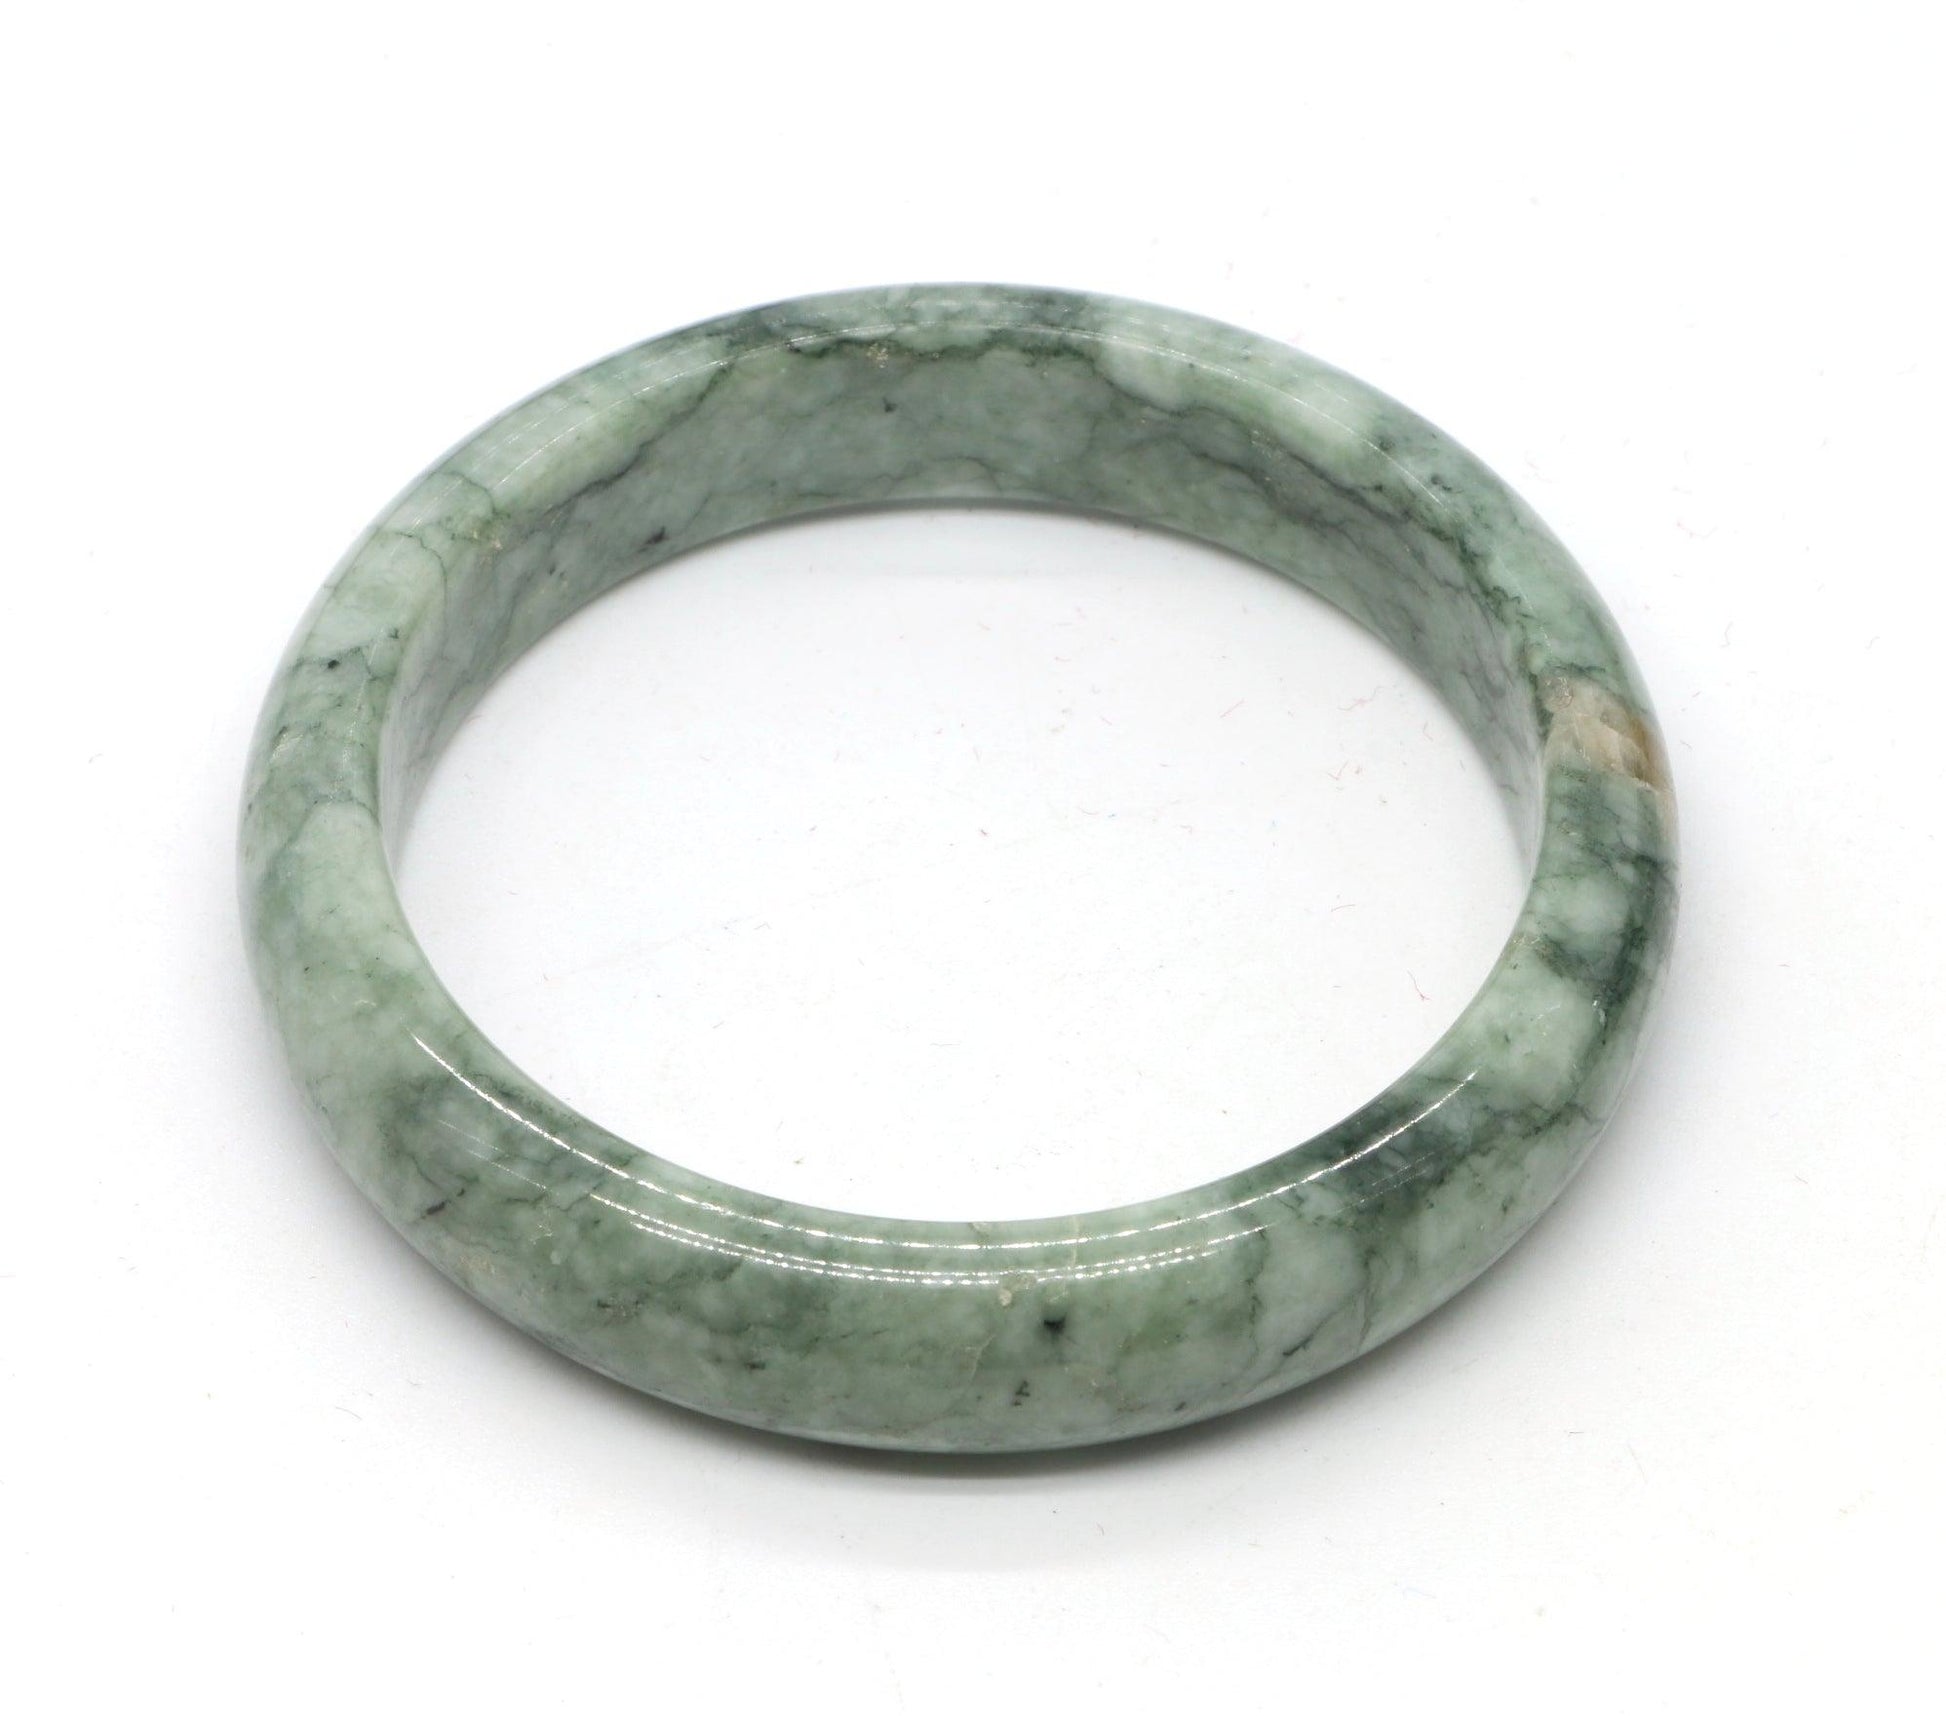 Type A Certified Jadeite Jade Bangle Size 56 -58mm B0BNDP4PY5 - Jade-collector.com